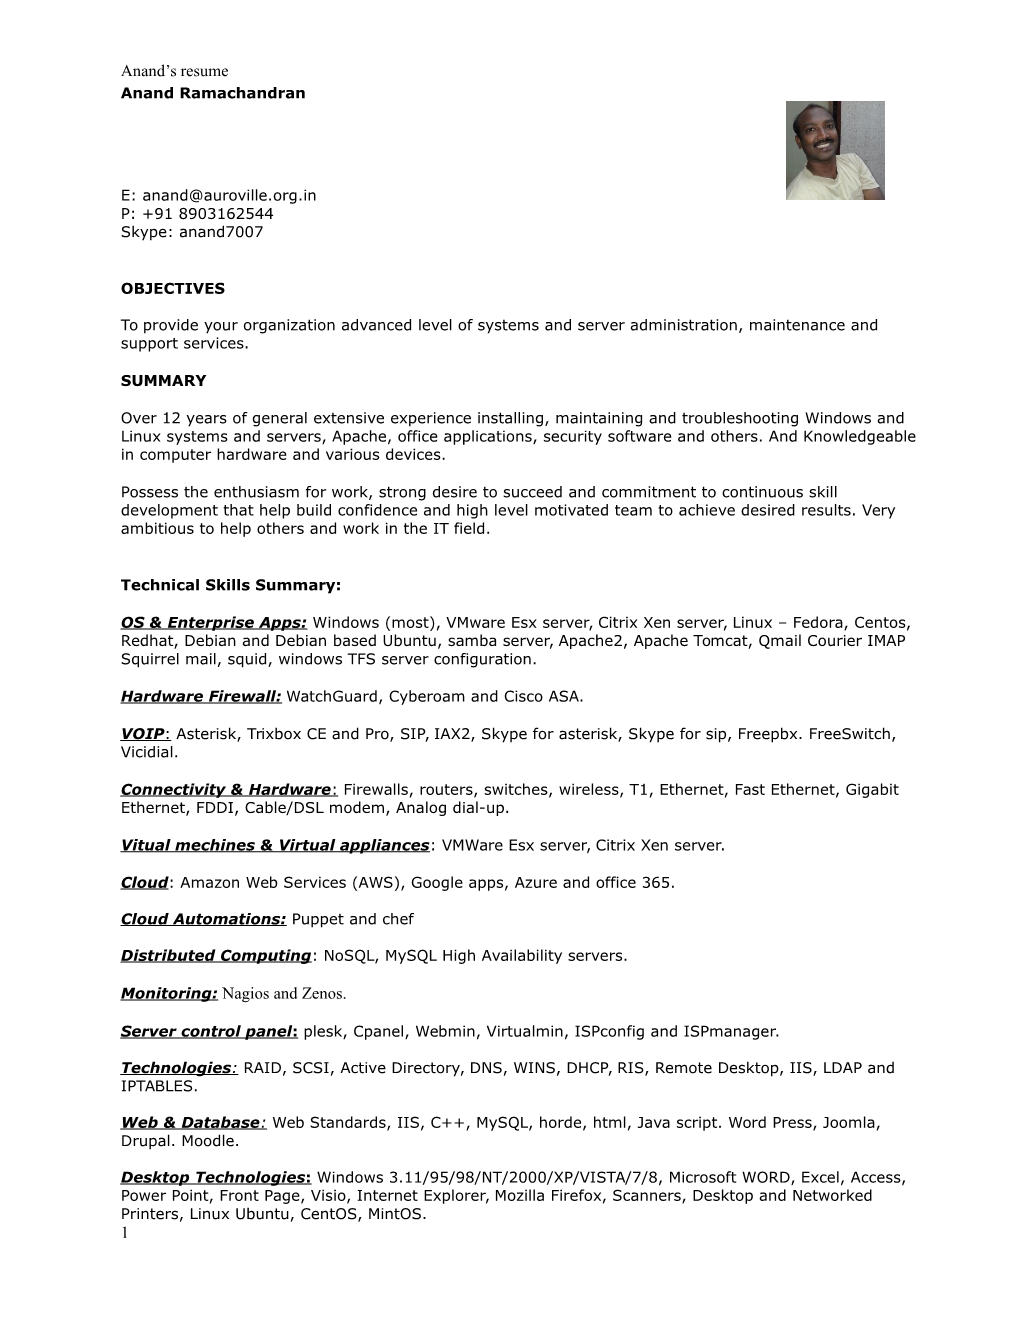 Anand's Resume Monitoring: Nagios and Zenos. 1